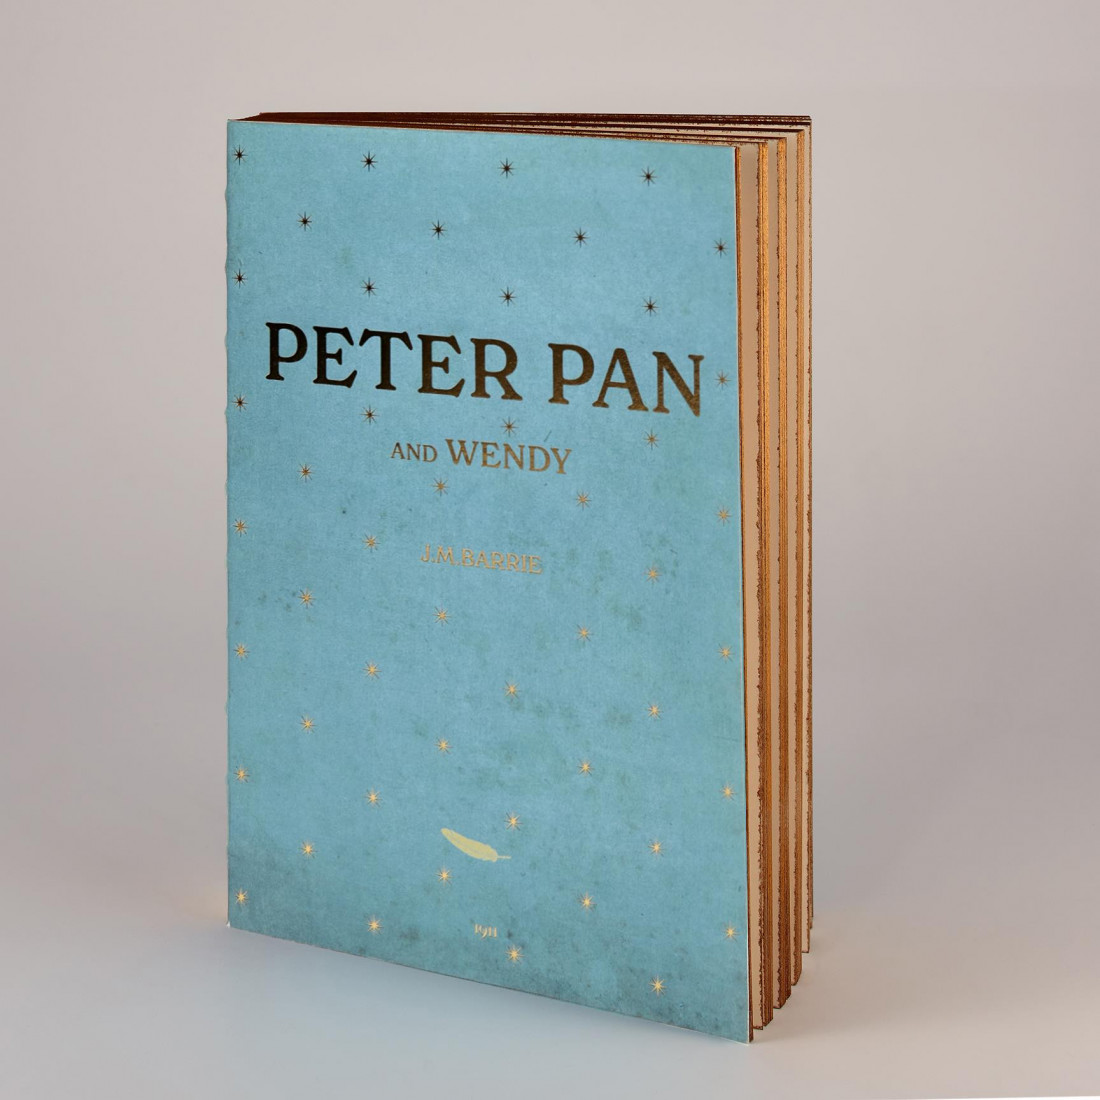 ANTIQUE NOTEBOOK Peter Pan LIBRI MUTI